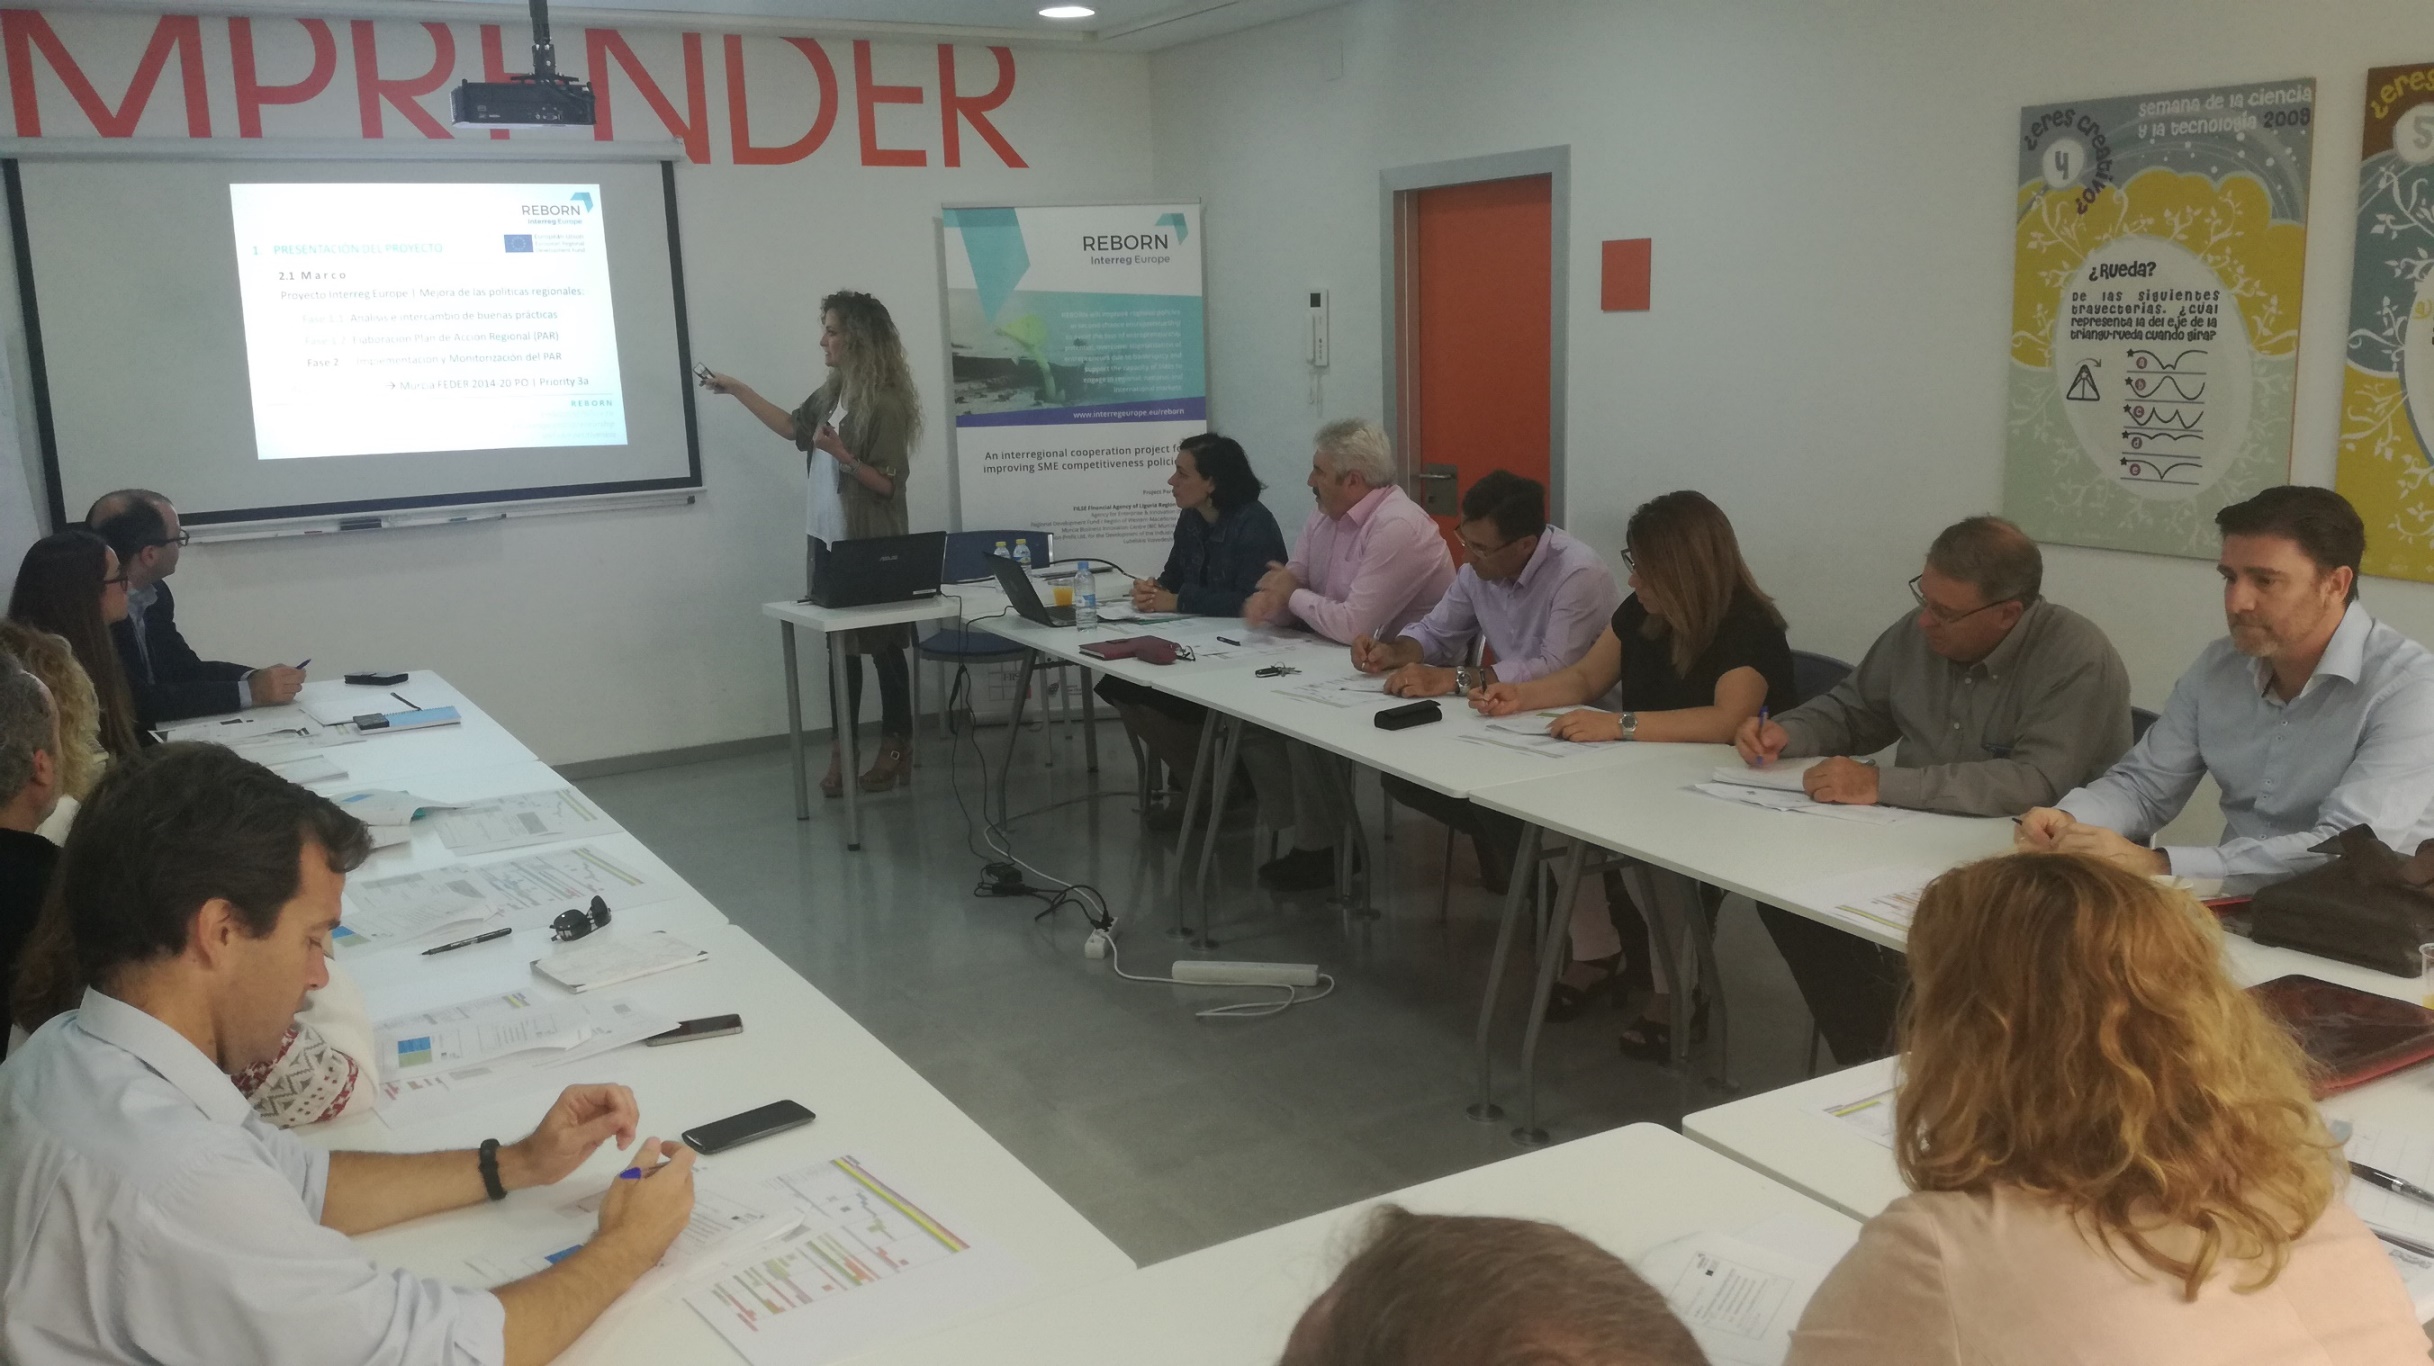 First Stakeholder REBORN Meeting in Murcia 